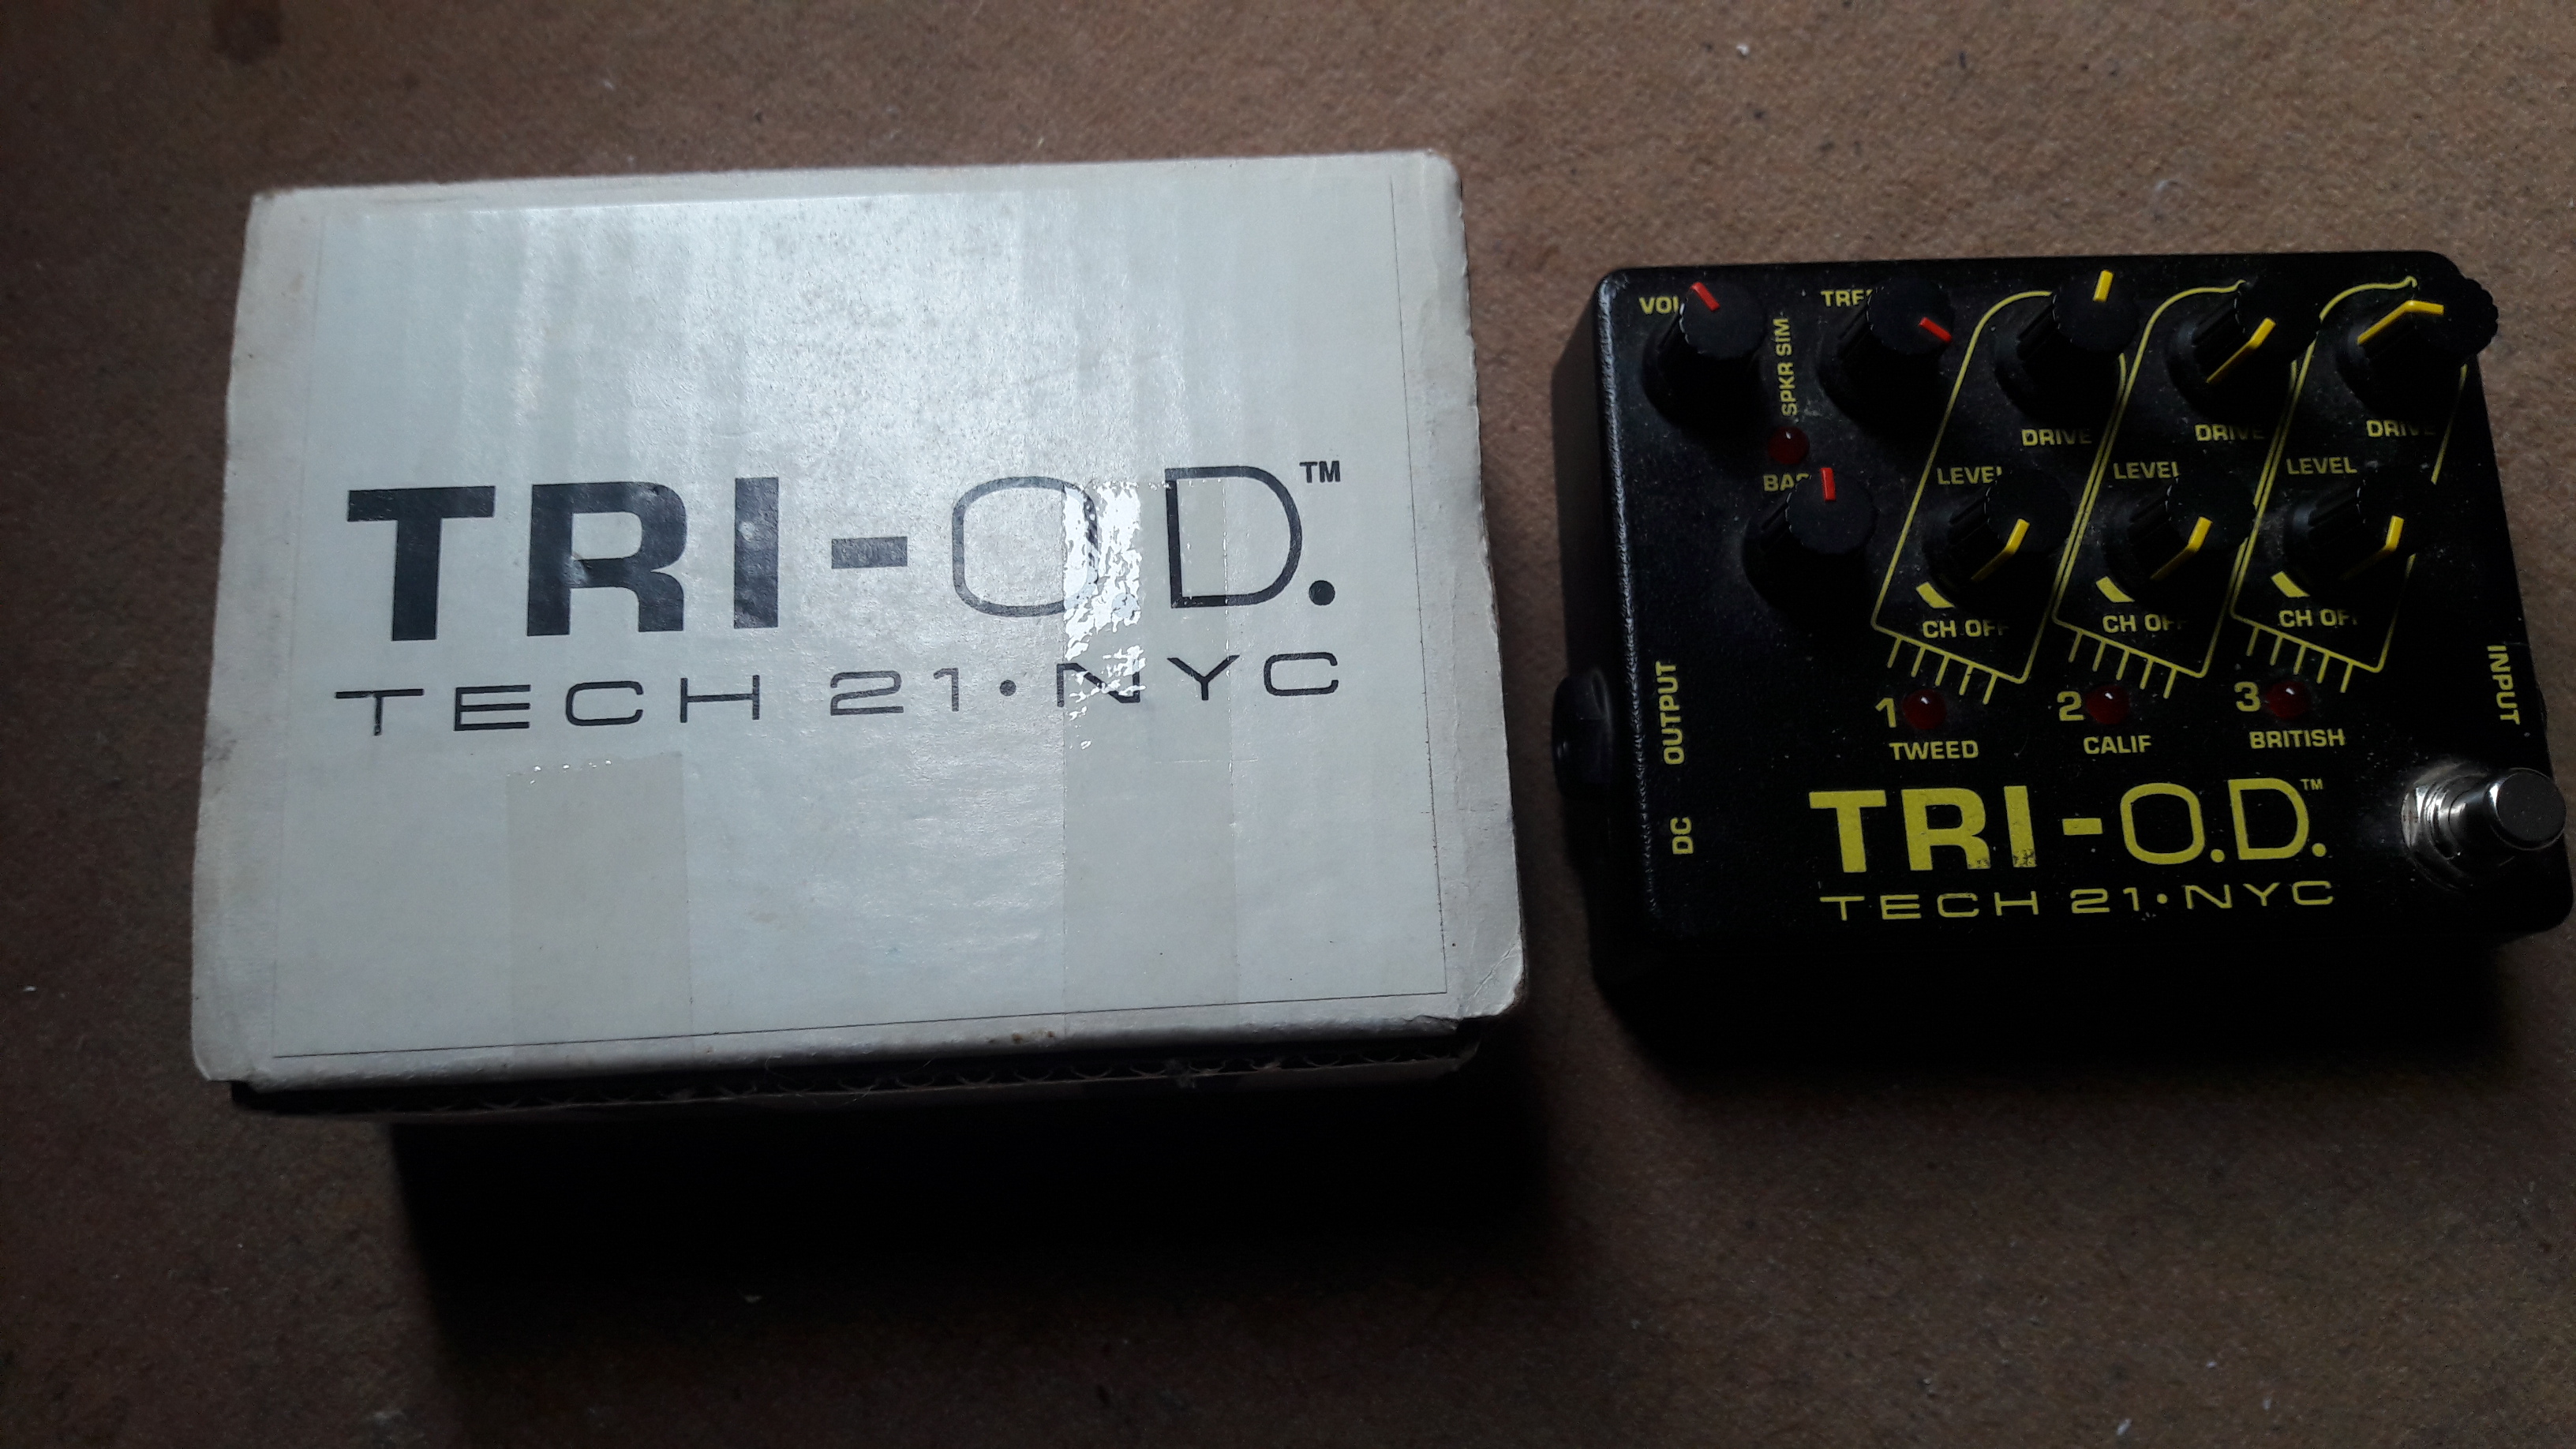 Tri-OD - Tech 21 Tri-OD - Audiofanzine